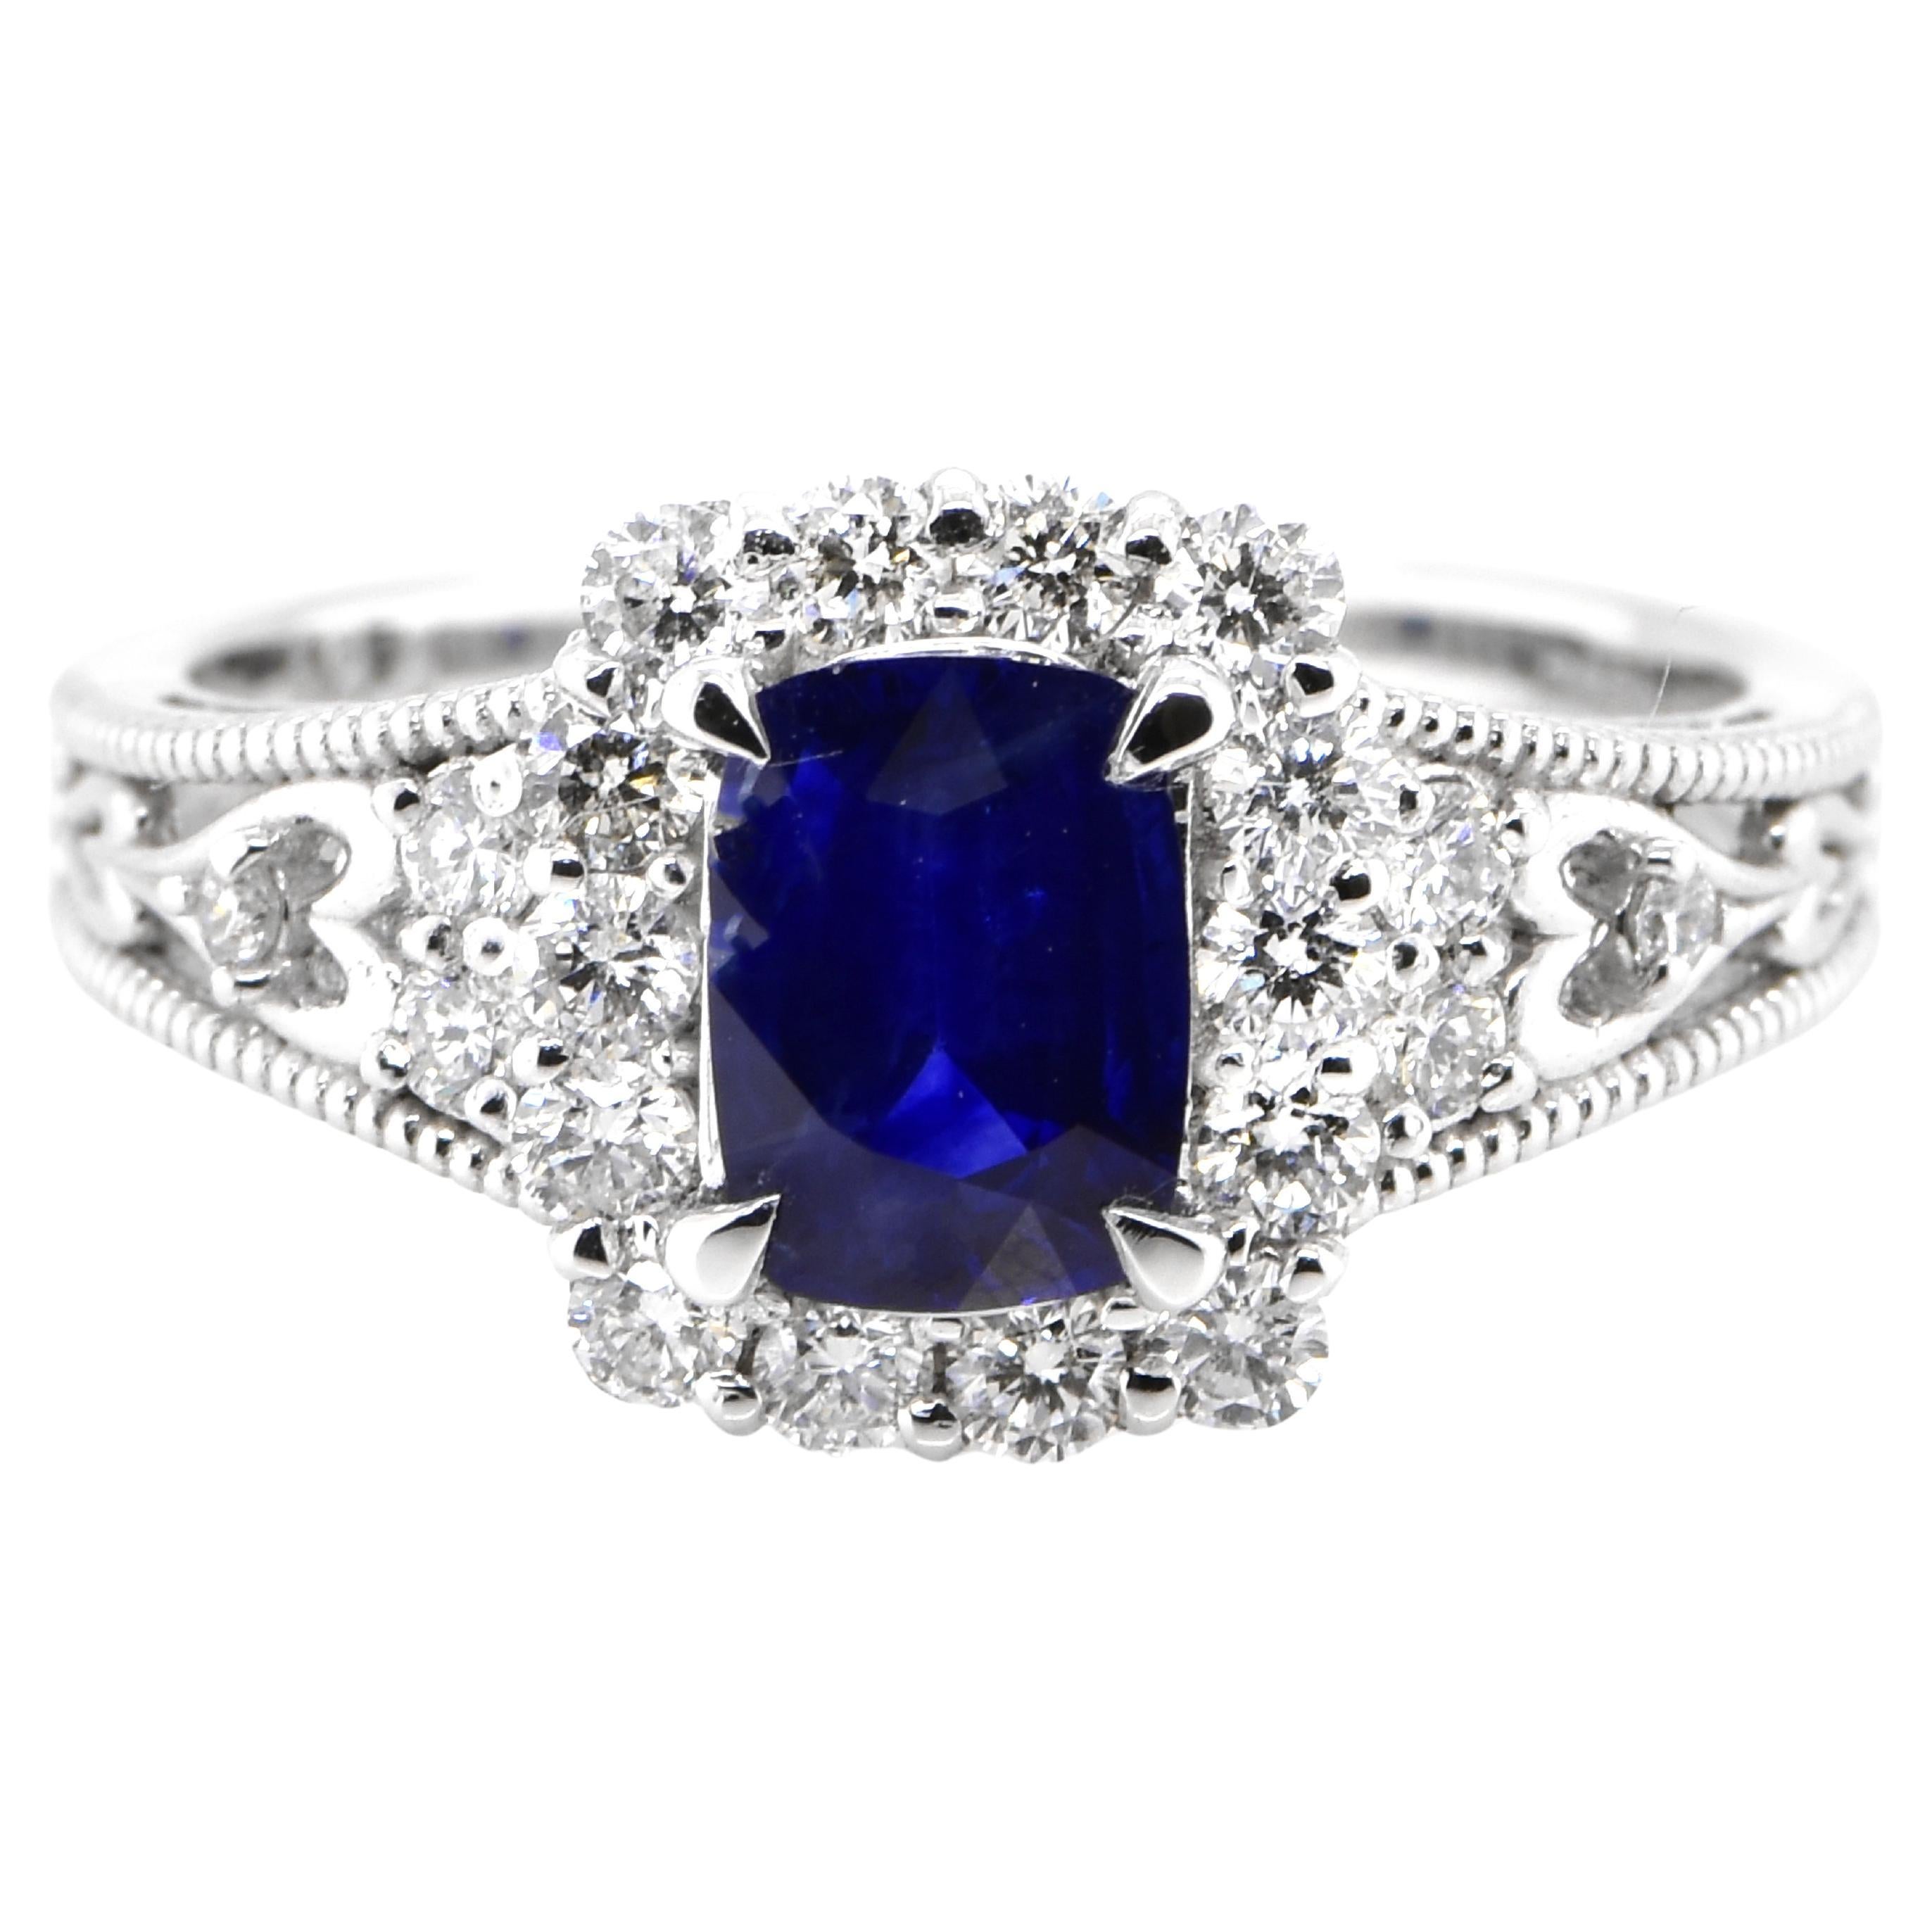 1.24 Carat Natural Royal Blue Sapphire & Diamond Ring set in Platinum For Sale